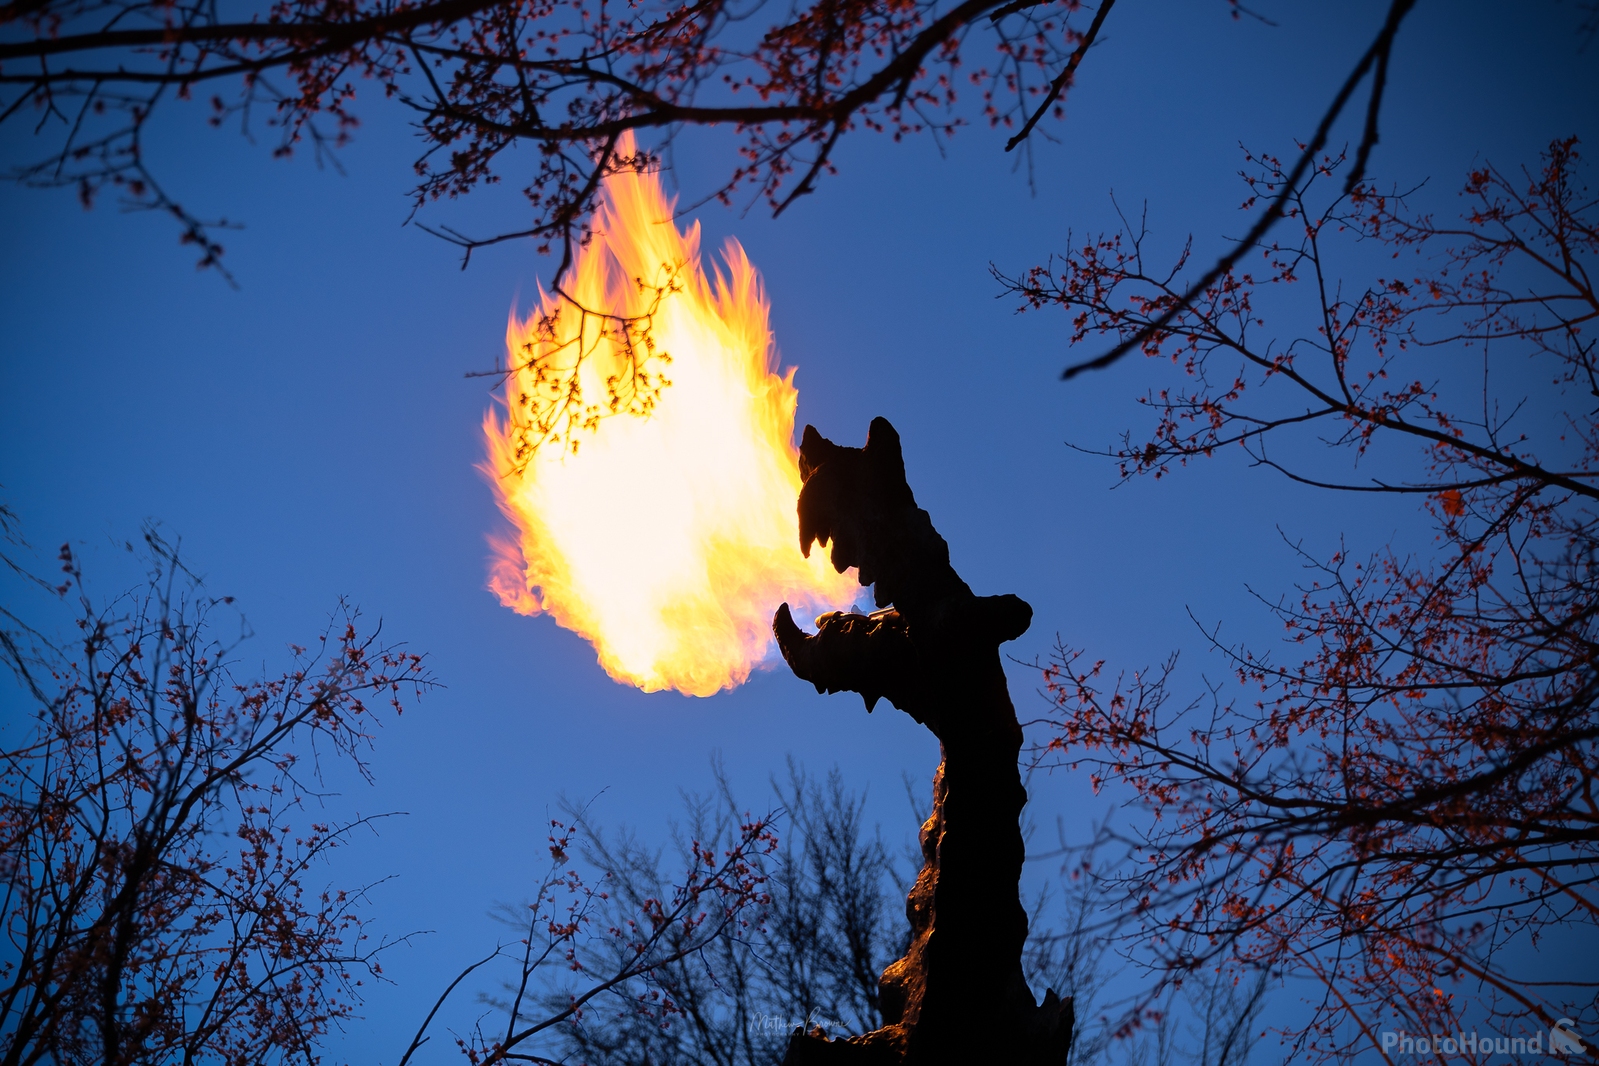 Image of Smok Wawelski (Fire Breathing Dragon) by Mathew Browne